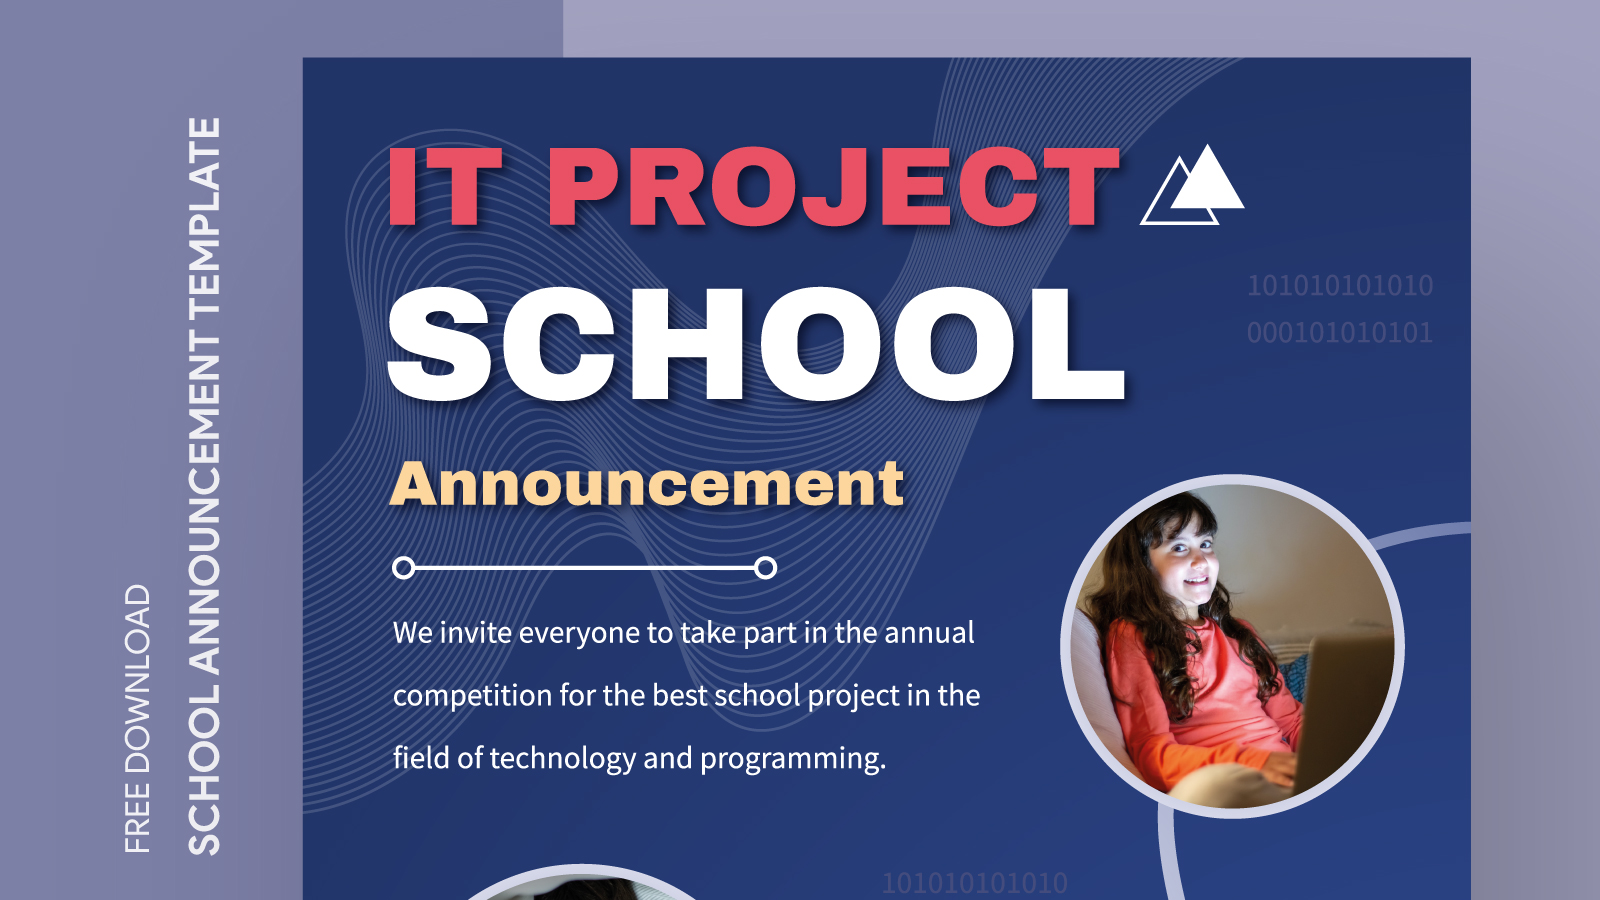 IT Project School Announcement Free Google Docs Template gdoc io